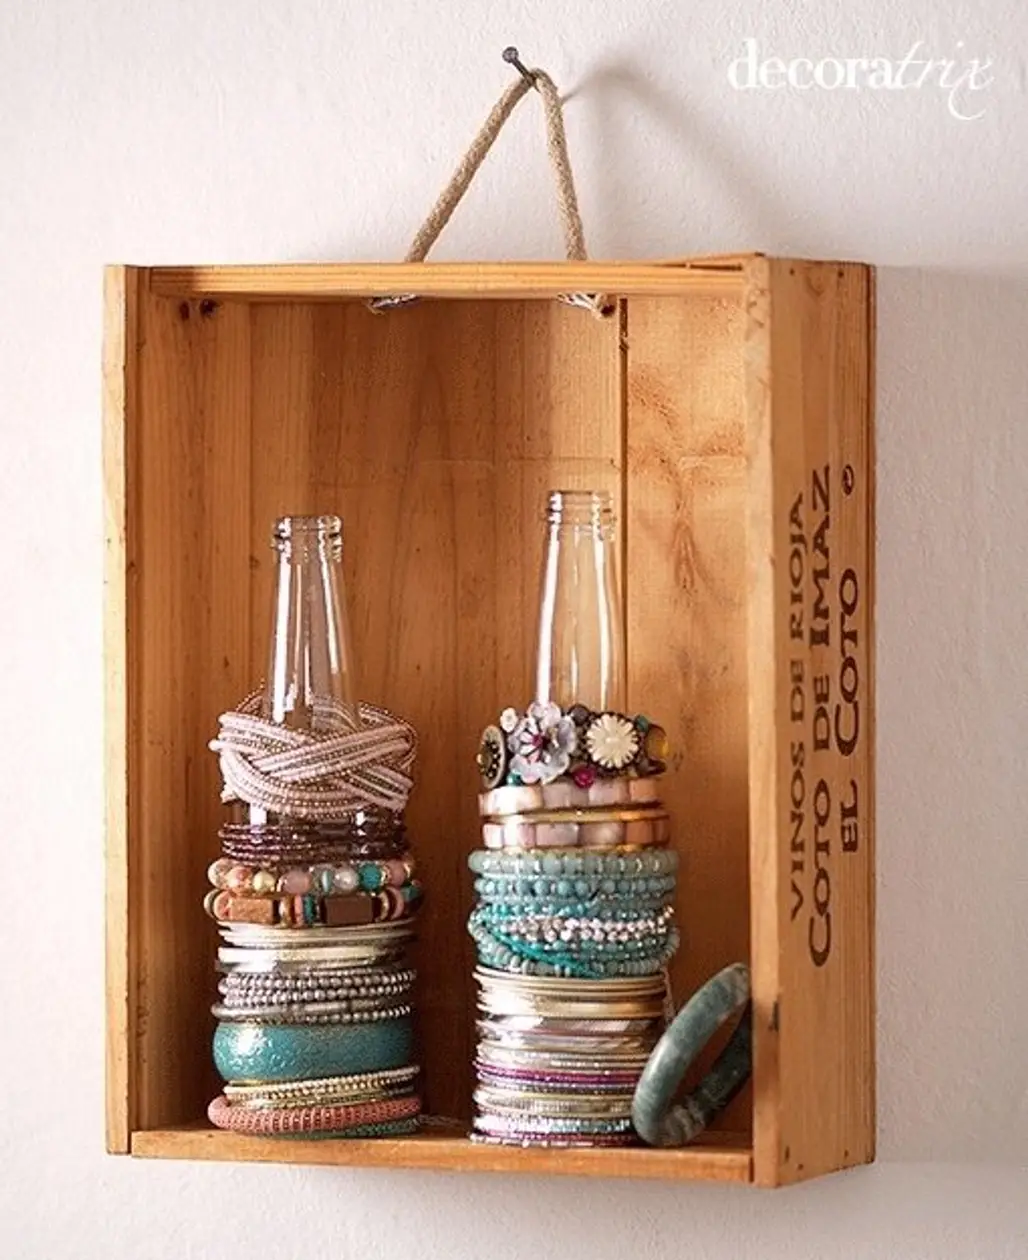 shelf,wood,lighting,bottle,wine bottle,